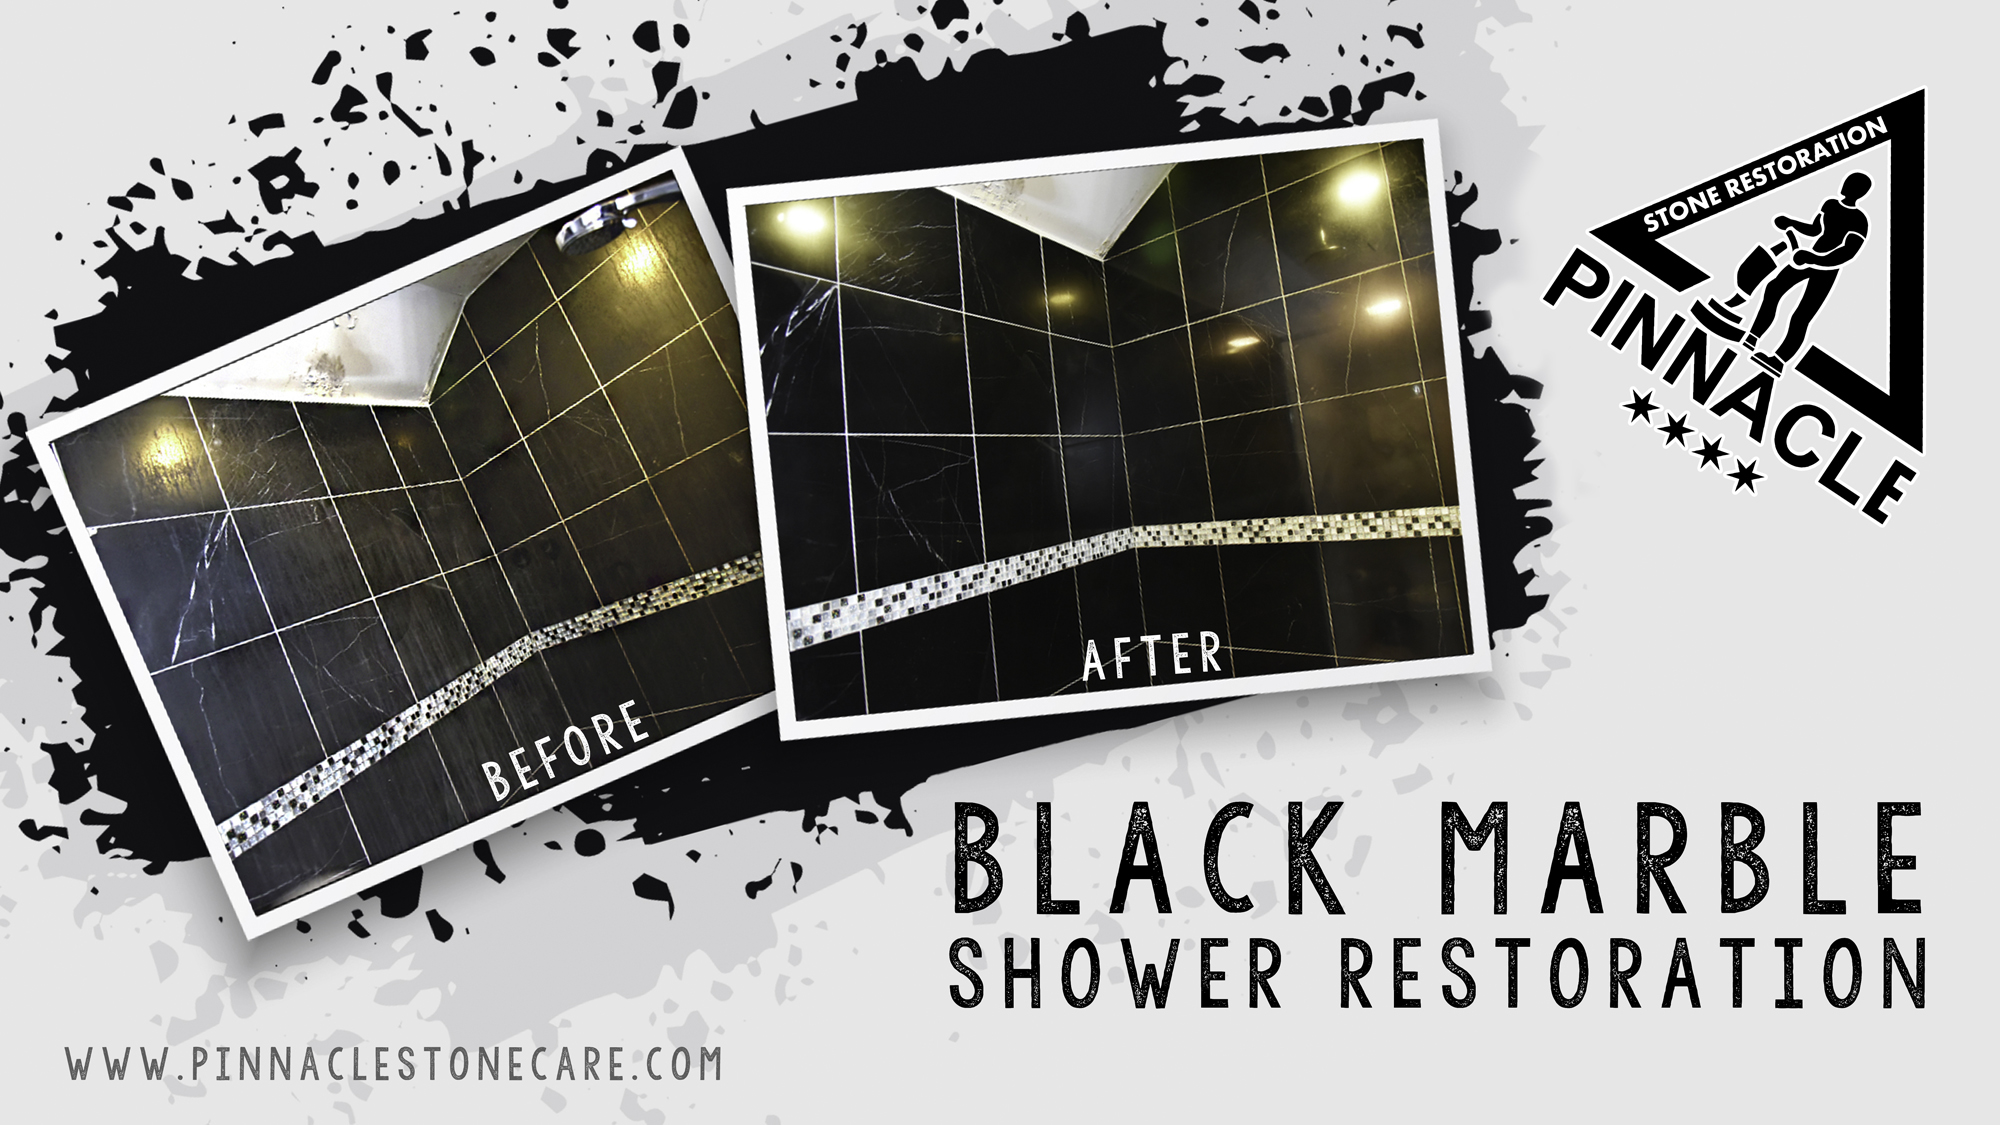 Black marble tile shower restoration – removing acidic cleaner damage, polishing, and sealing